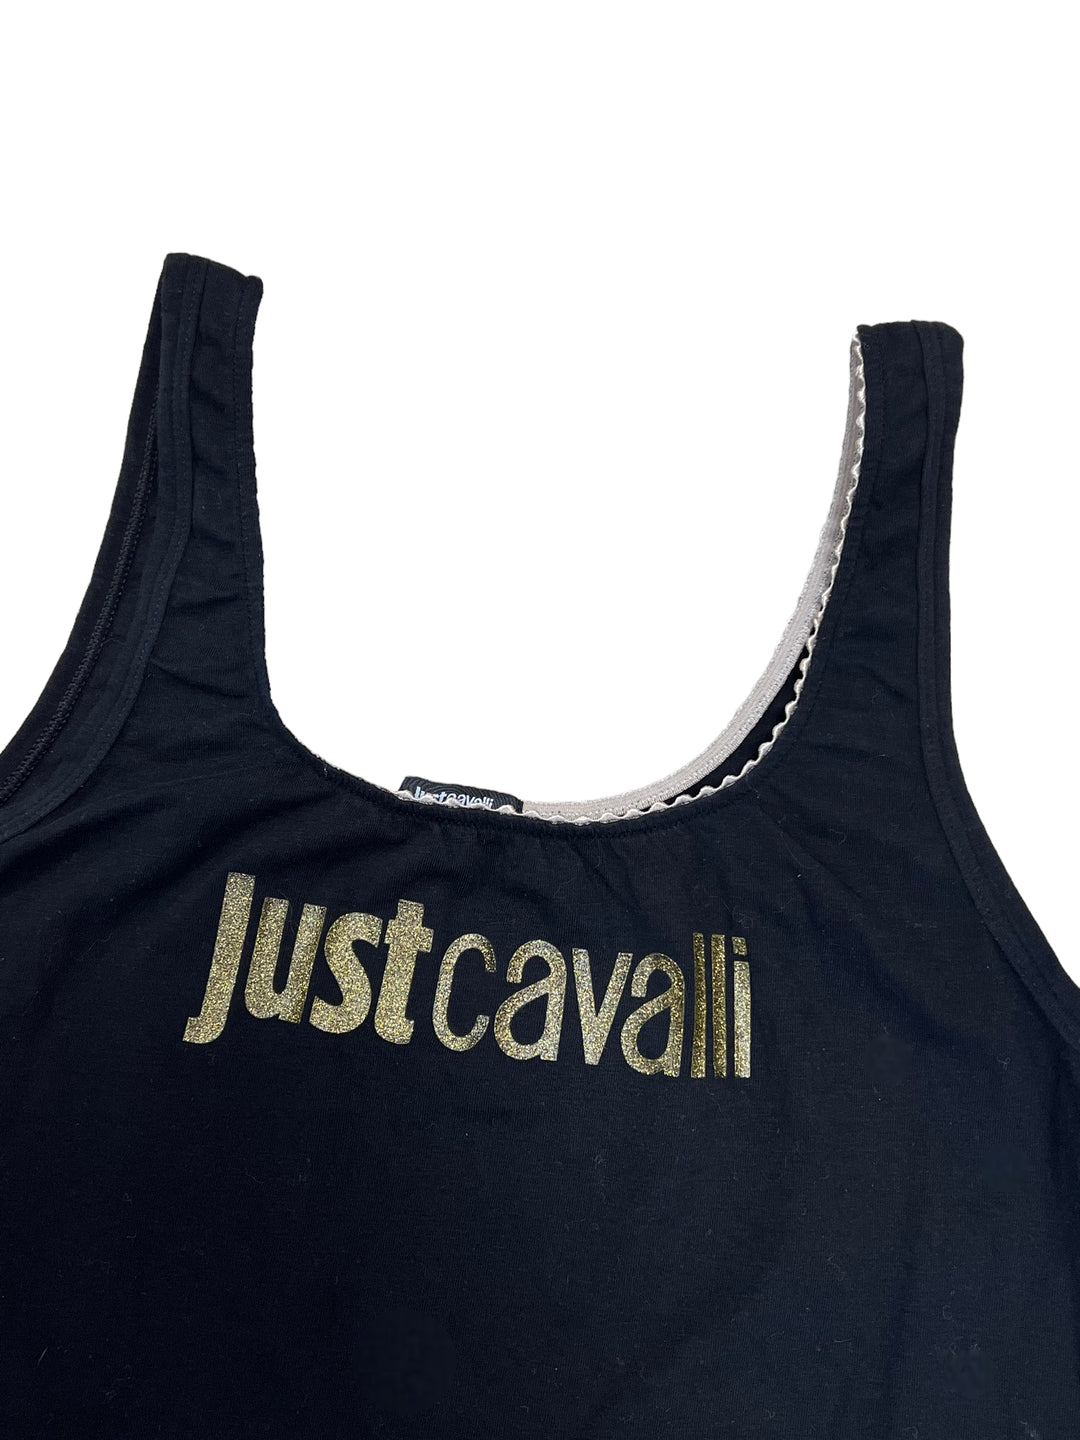 Just Cavalli Underwear Tank Top Women’s Extra Large